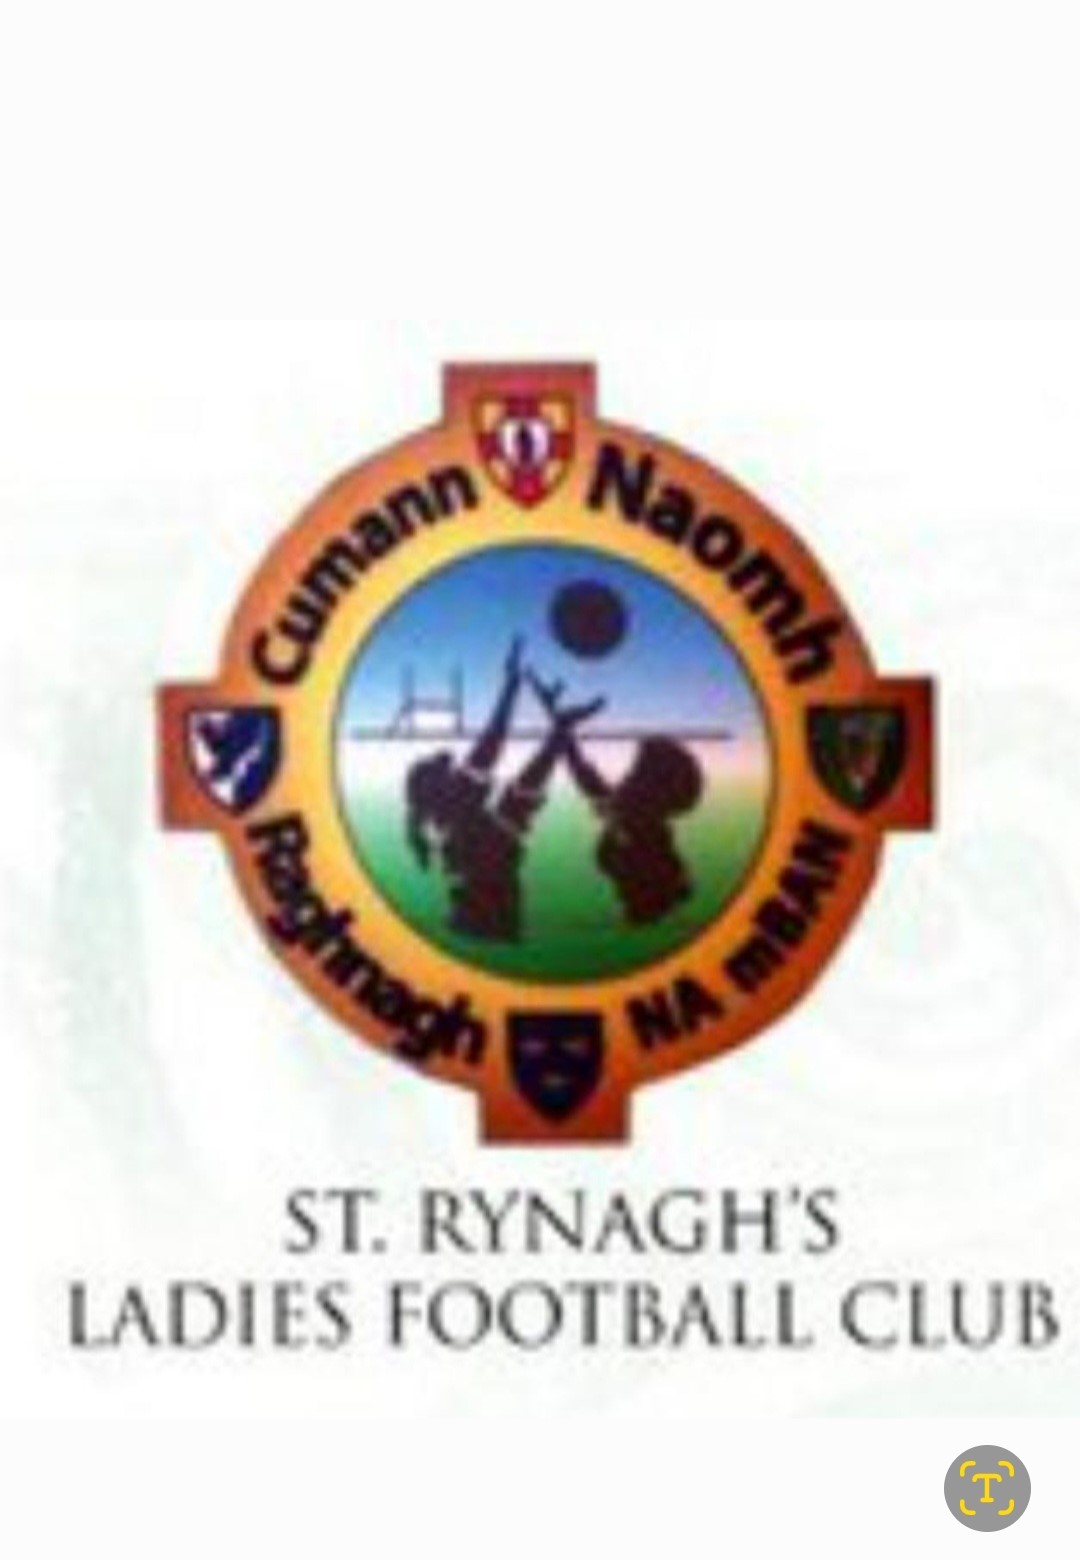 St Rynagh’s Ladies Football Club